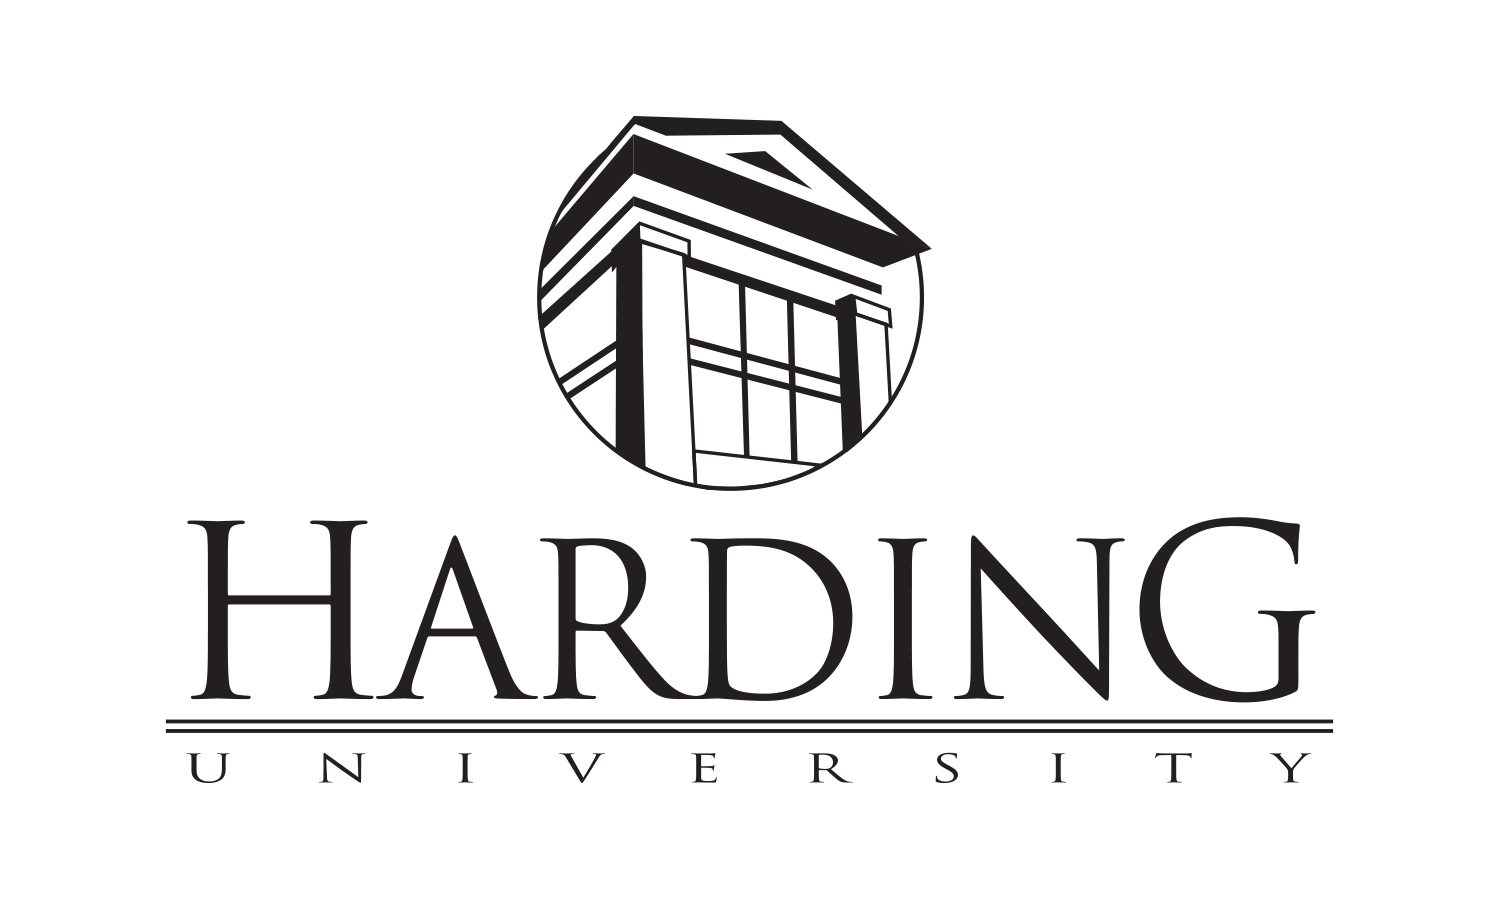 Top Web Design Program Logo: Harding University